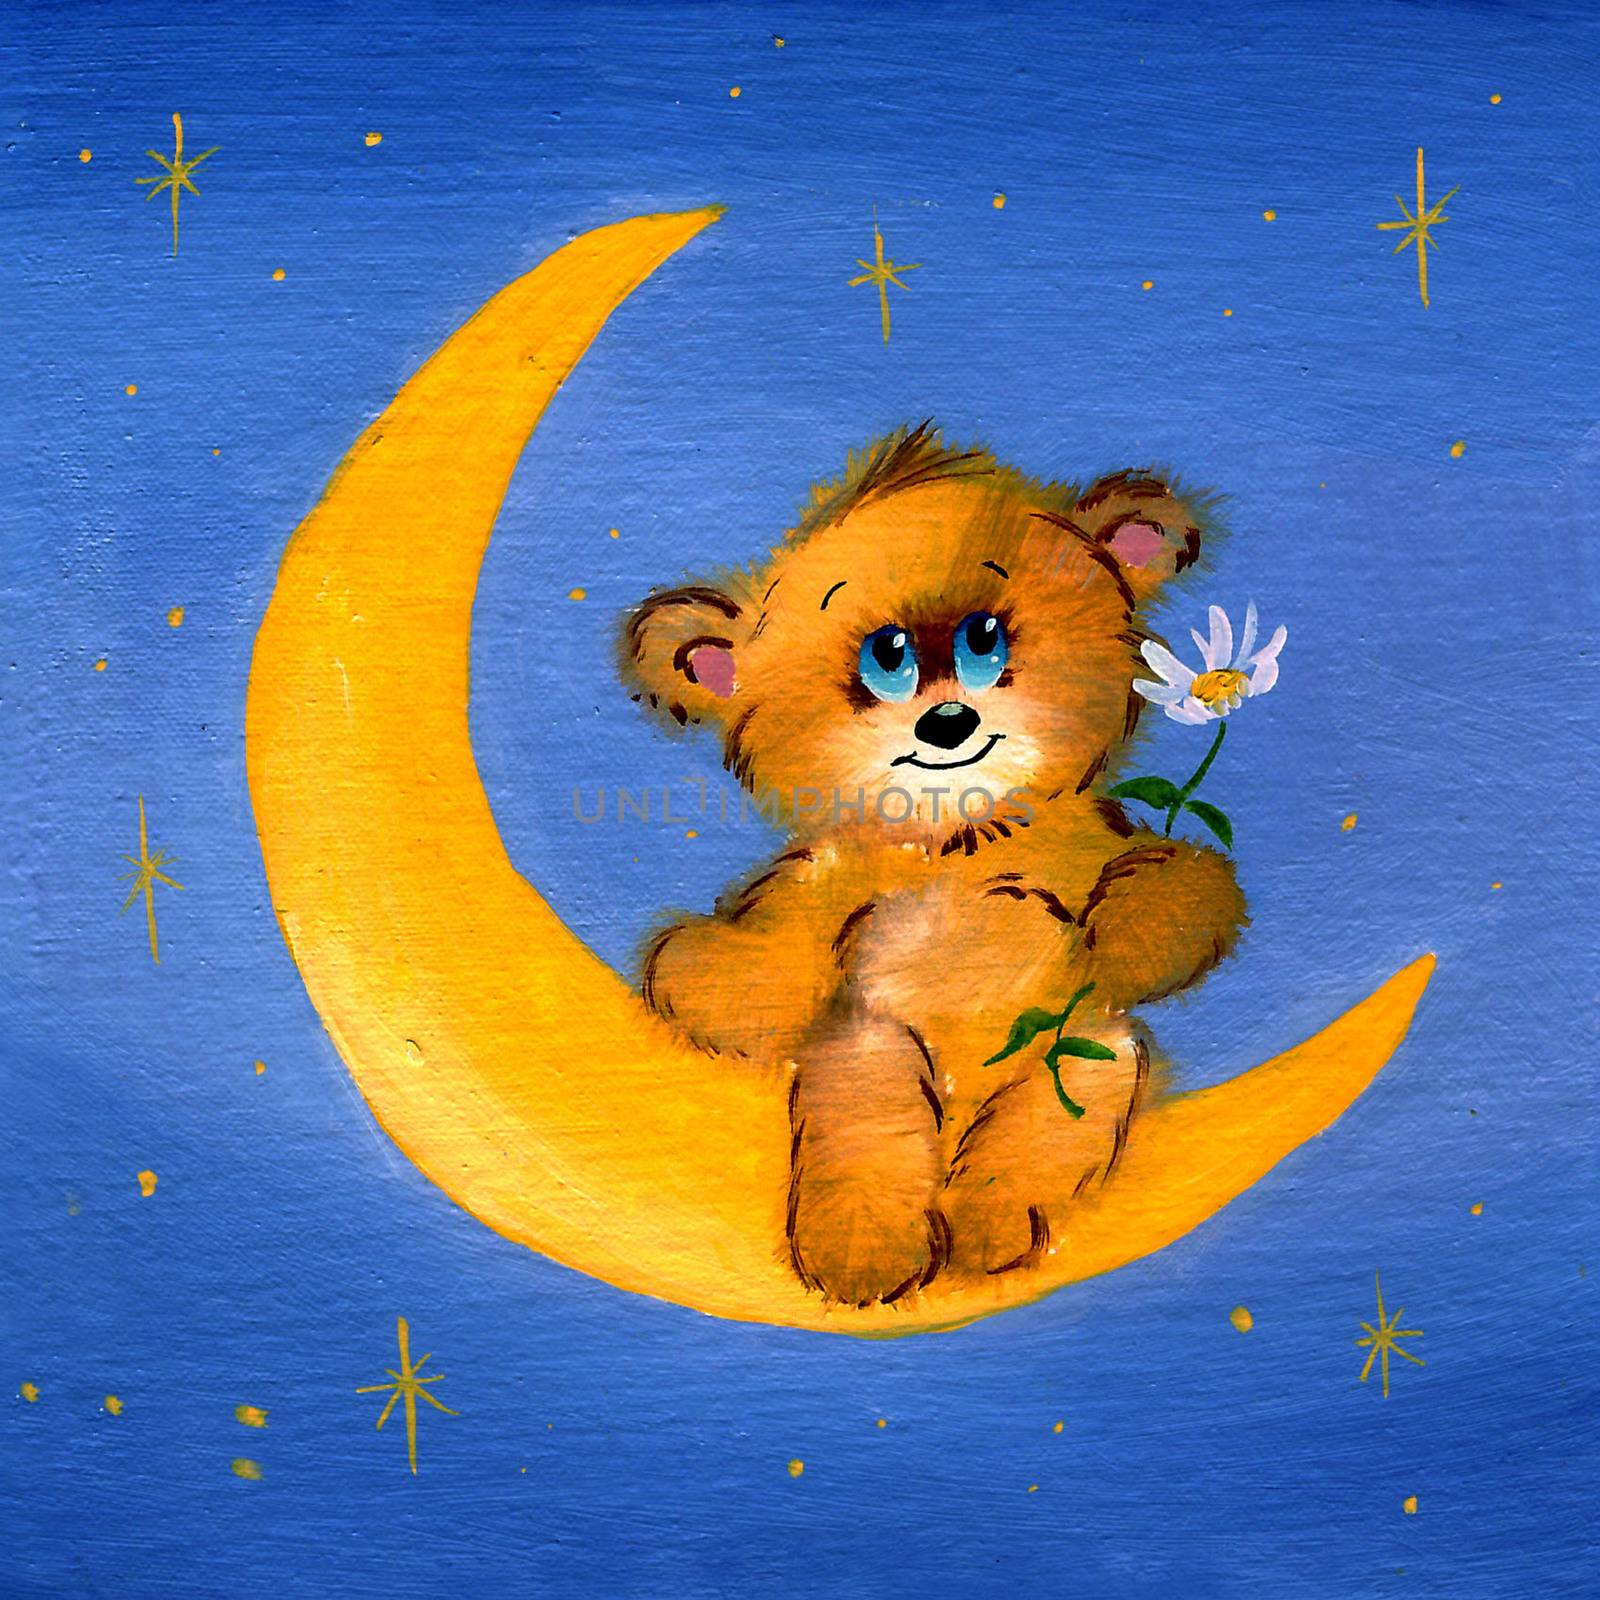 A small brown teddy bear sitting on the moon by Rasveta